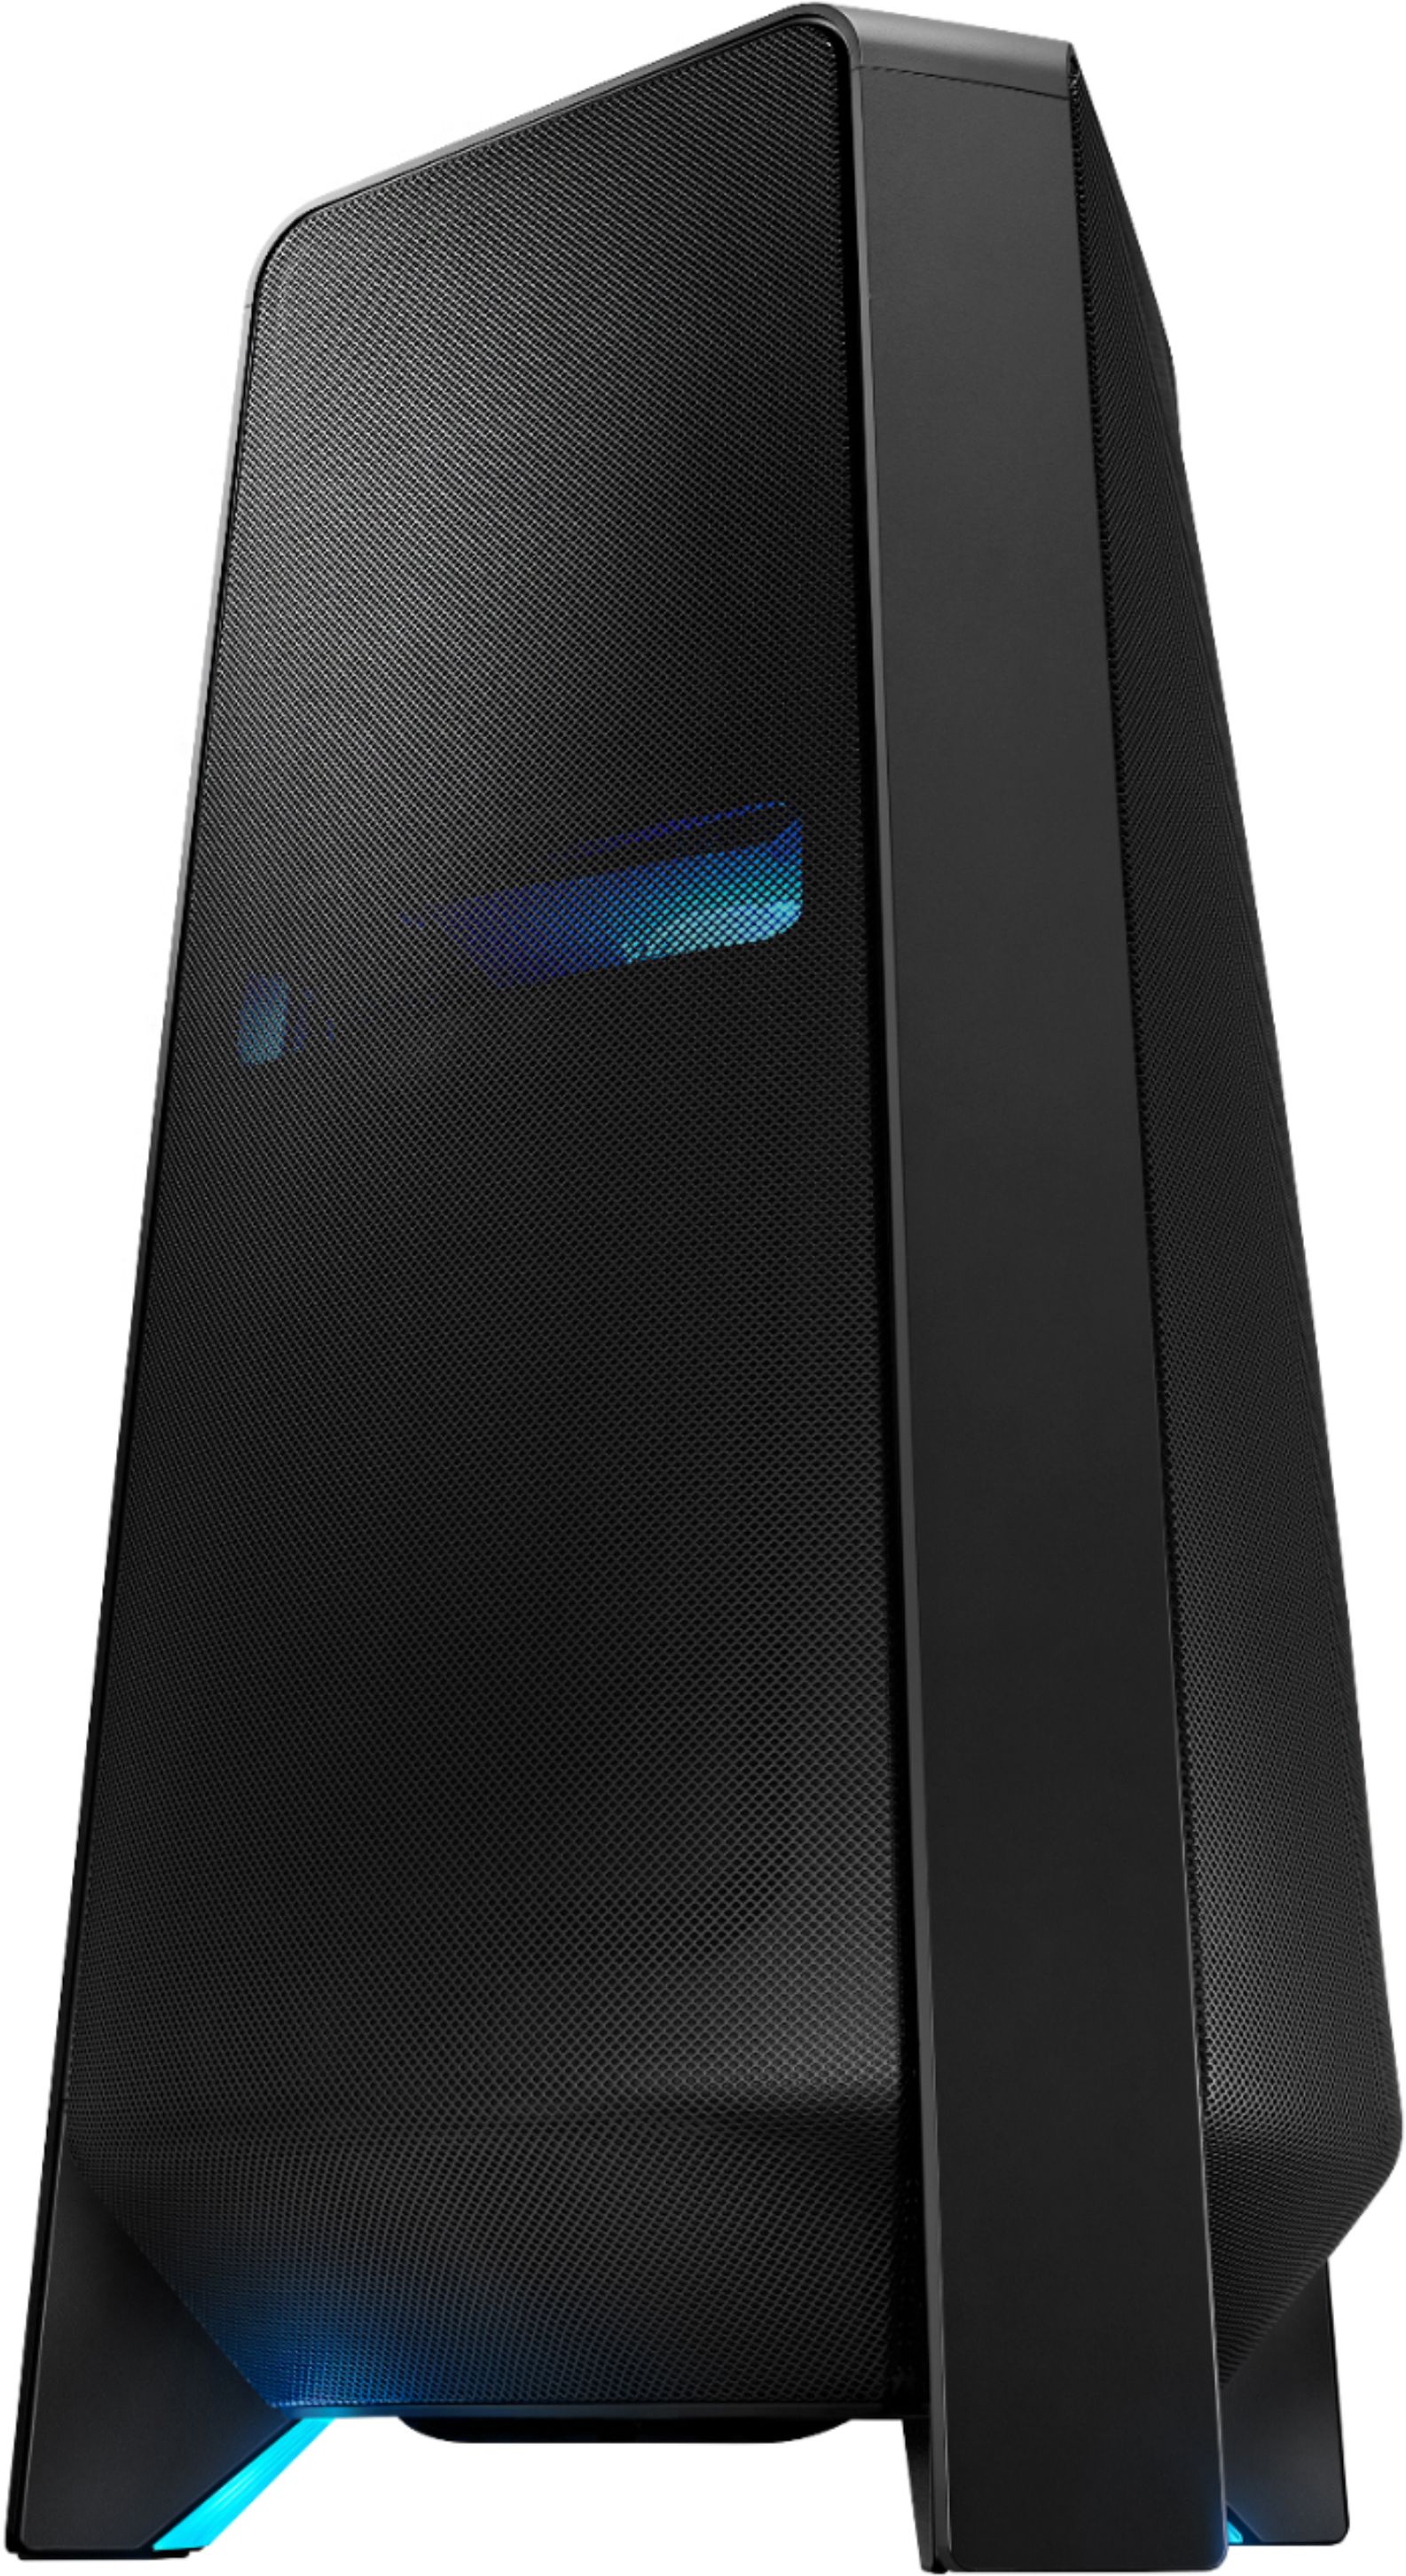 Samsung 300W, 500W, 1500W Sound Tower Speakers 38-45% off +EPP/Ed Discount $184.99 at Samsung